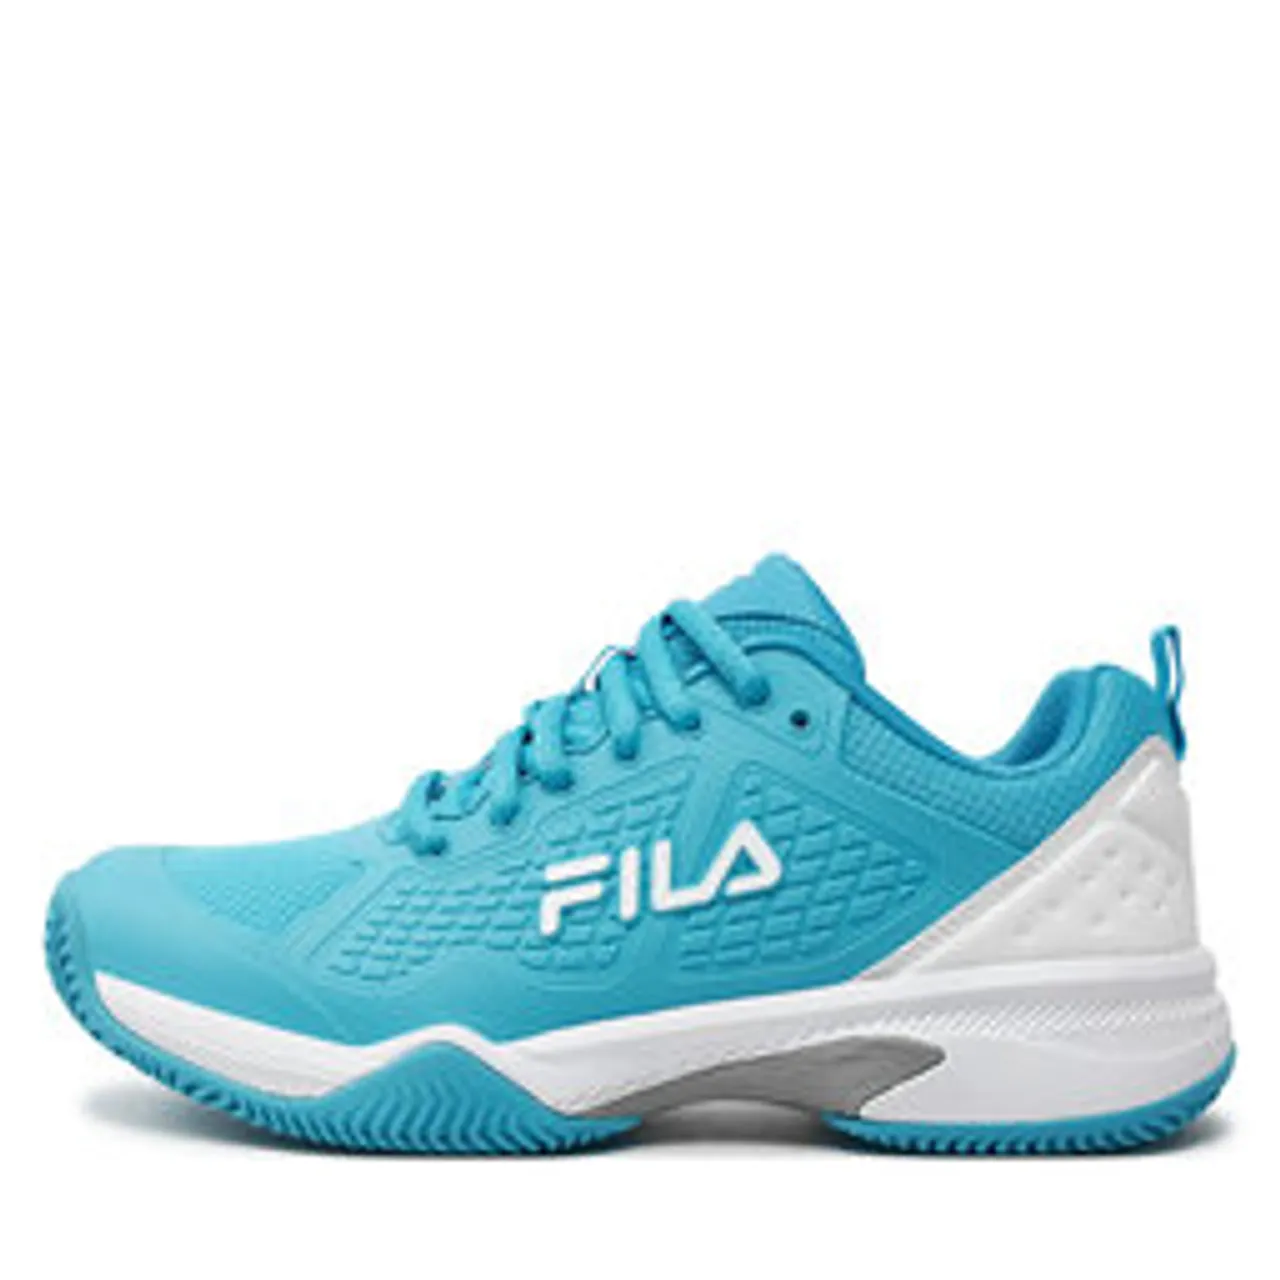 Schuhe Fila Incontro Woman FTW23209 Blau